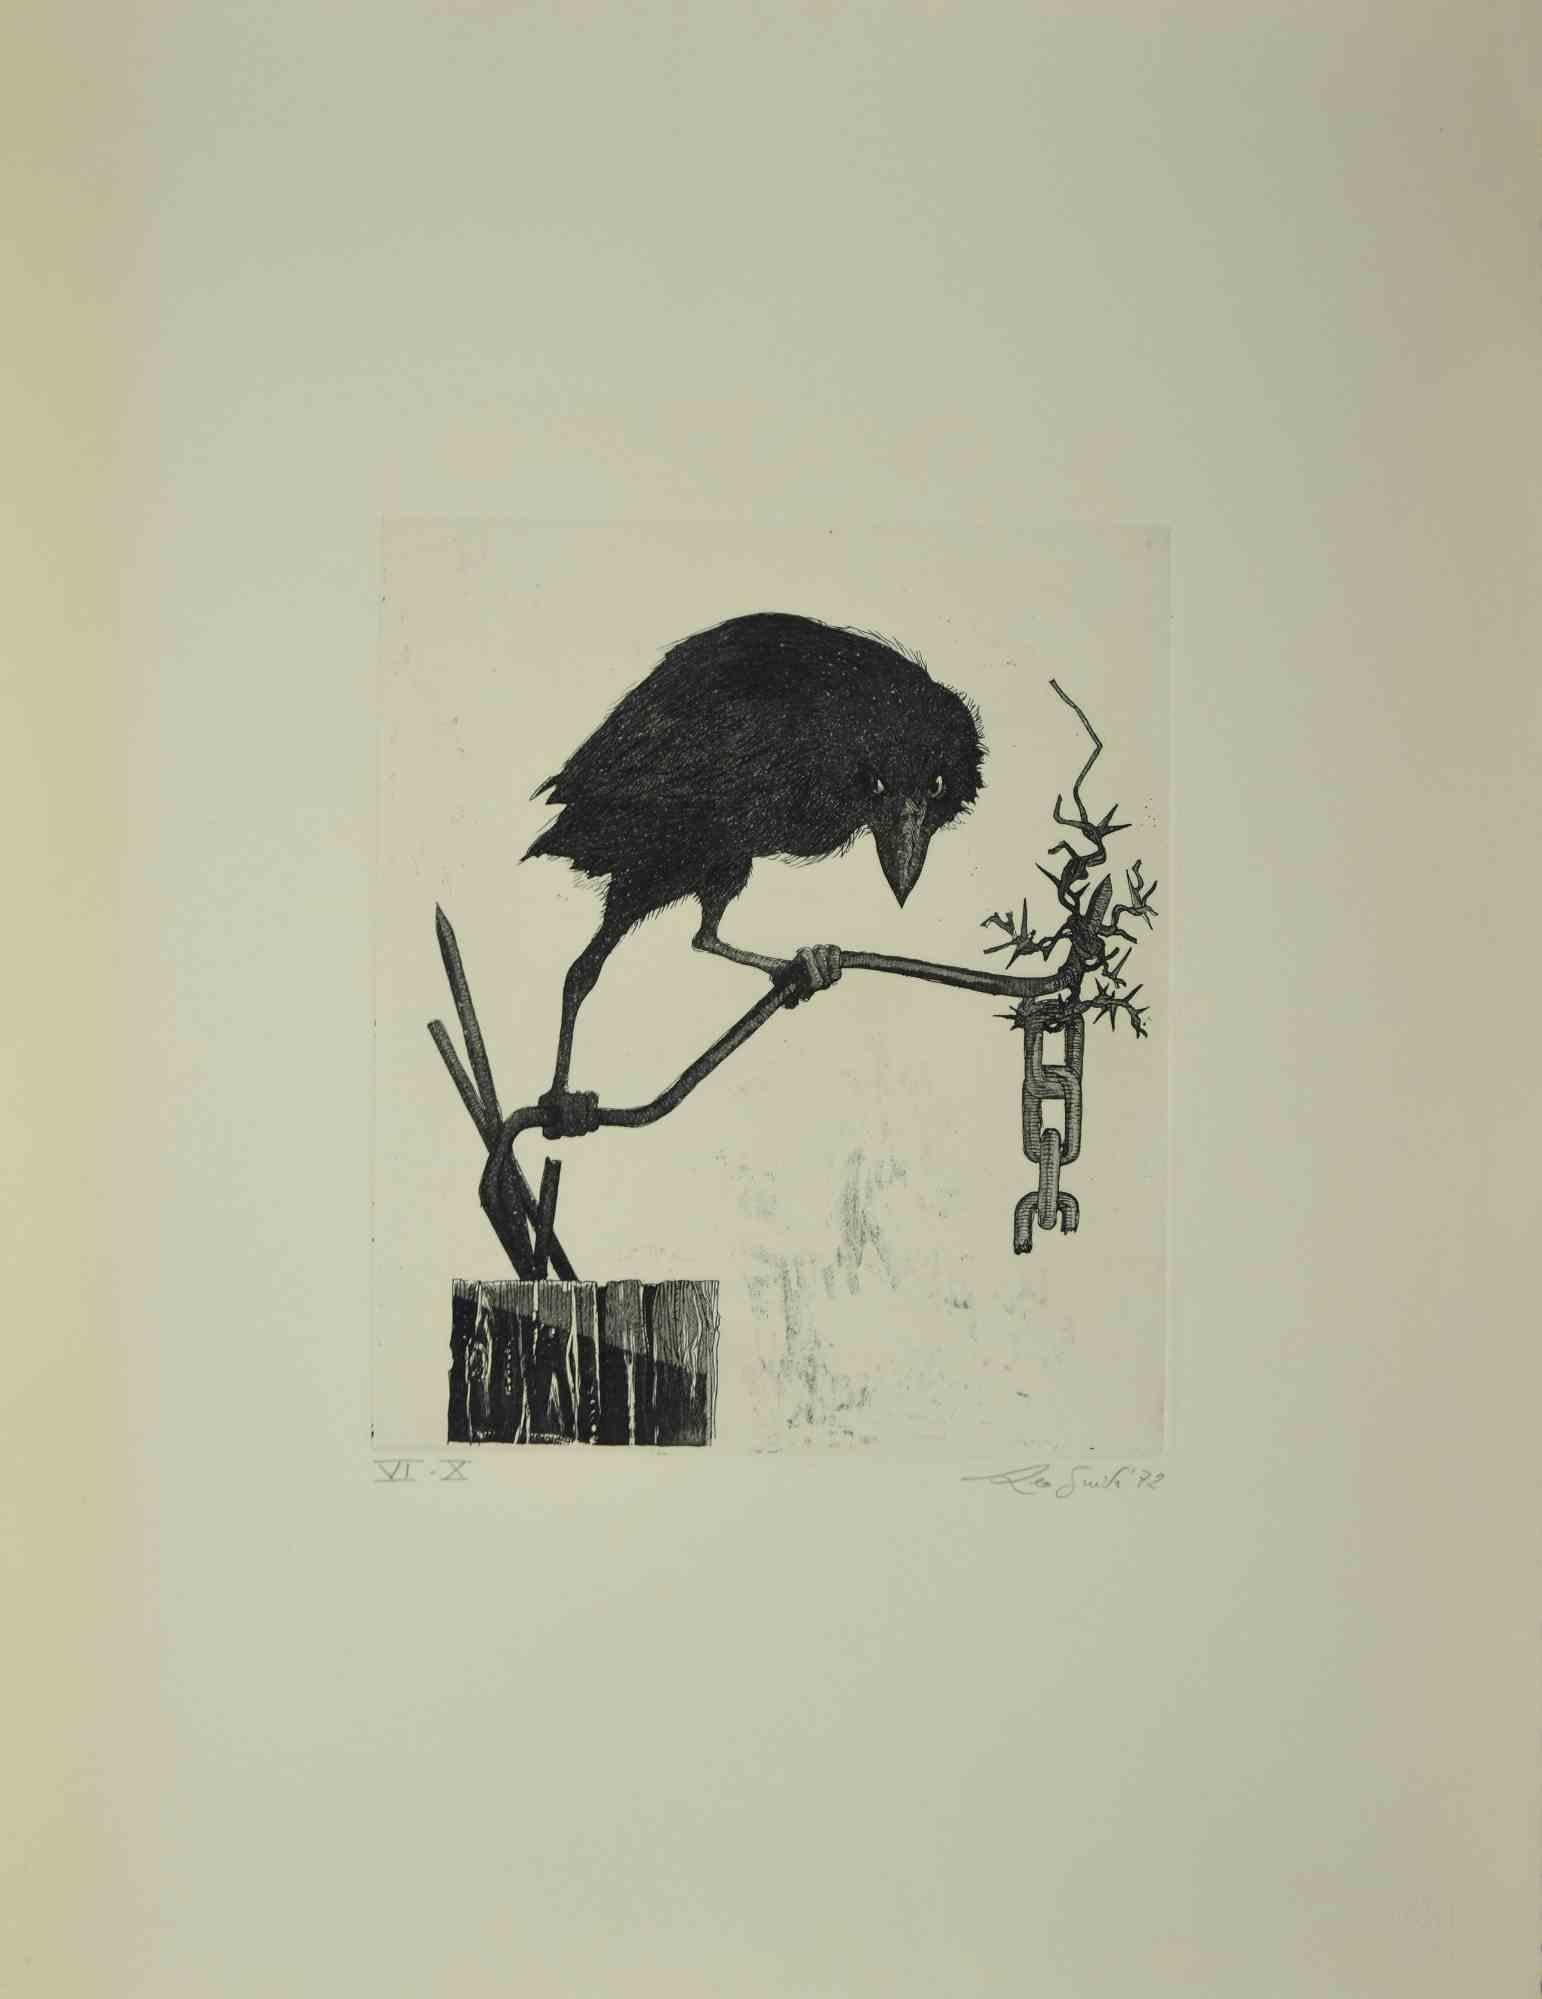 The Crow - Original Etching Print by Leo Guida - 1972